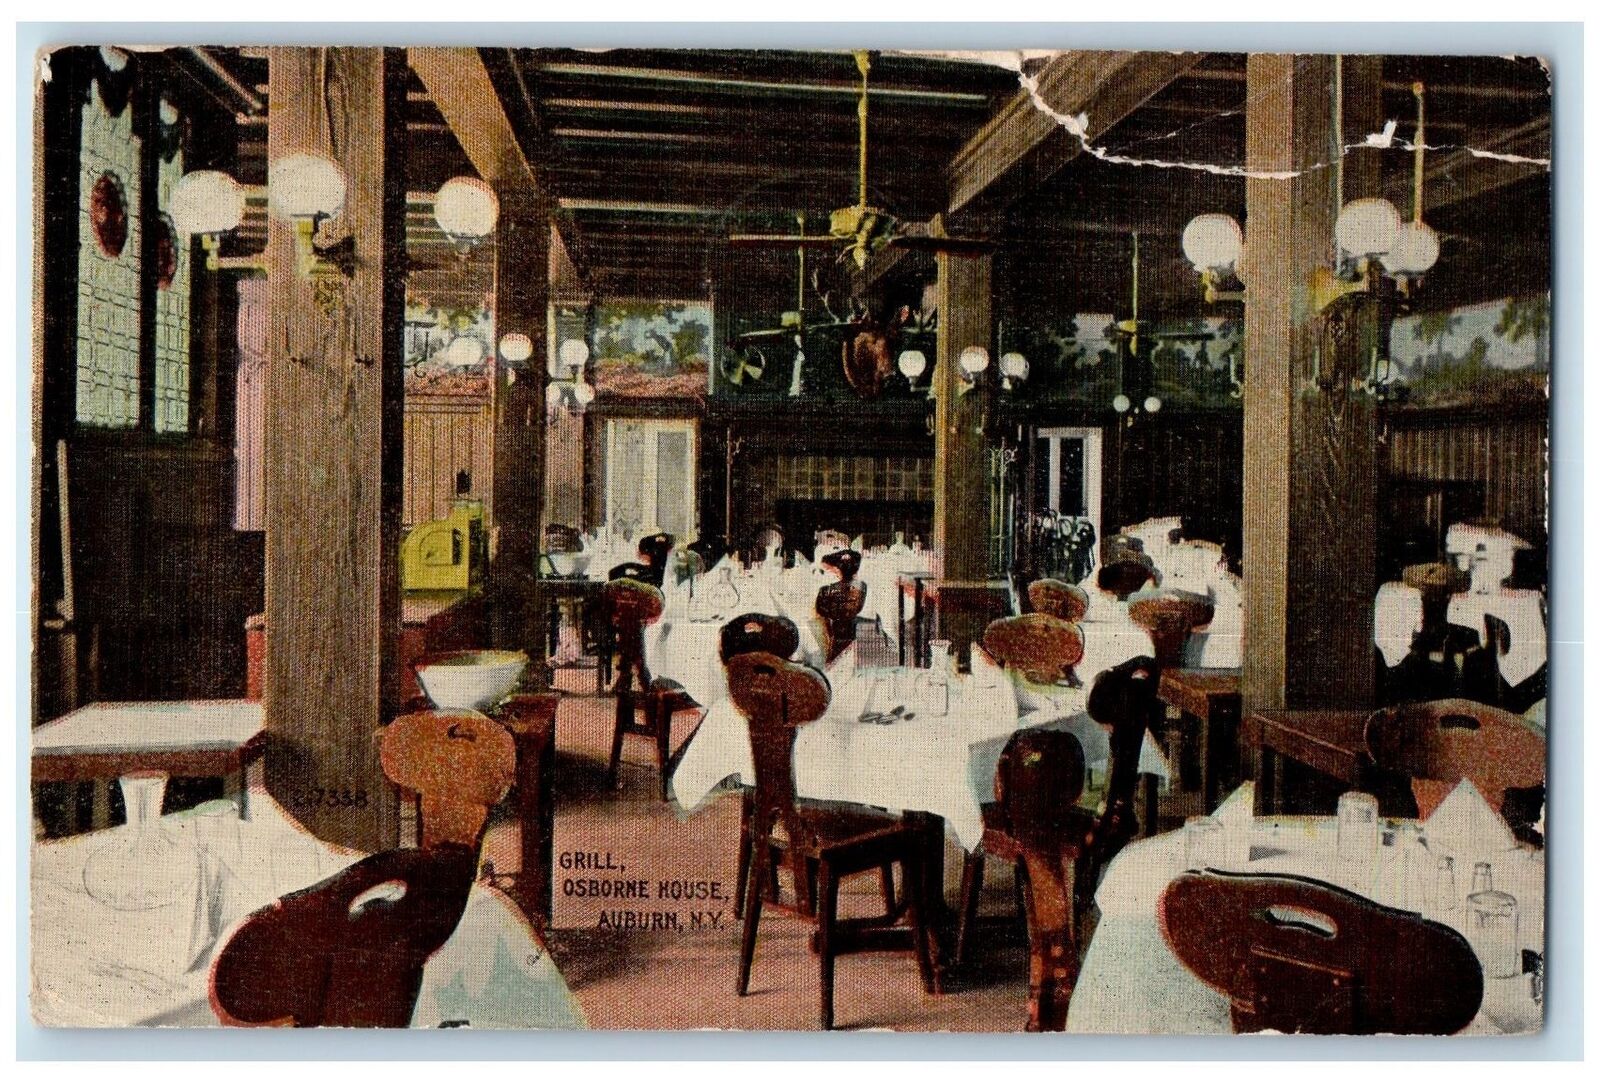 1913 Grill Osborne House Auburn New York NY Hotel Restaurant Interior Postcard